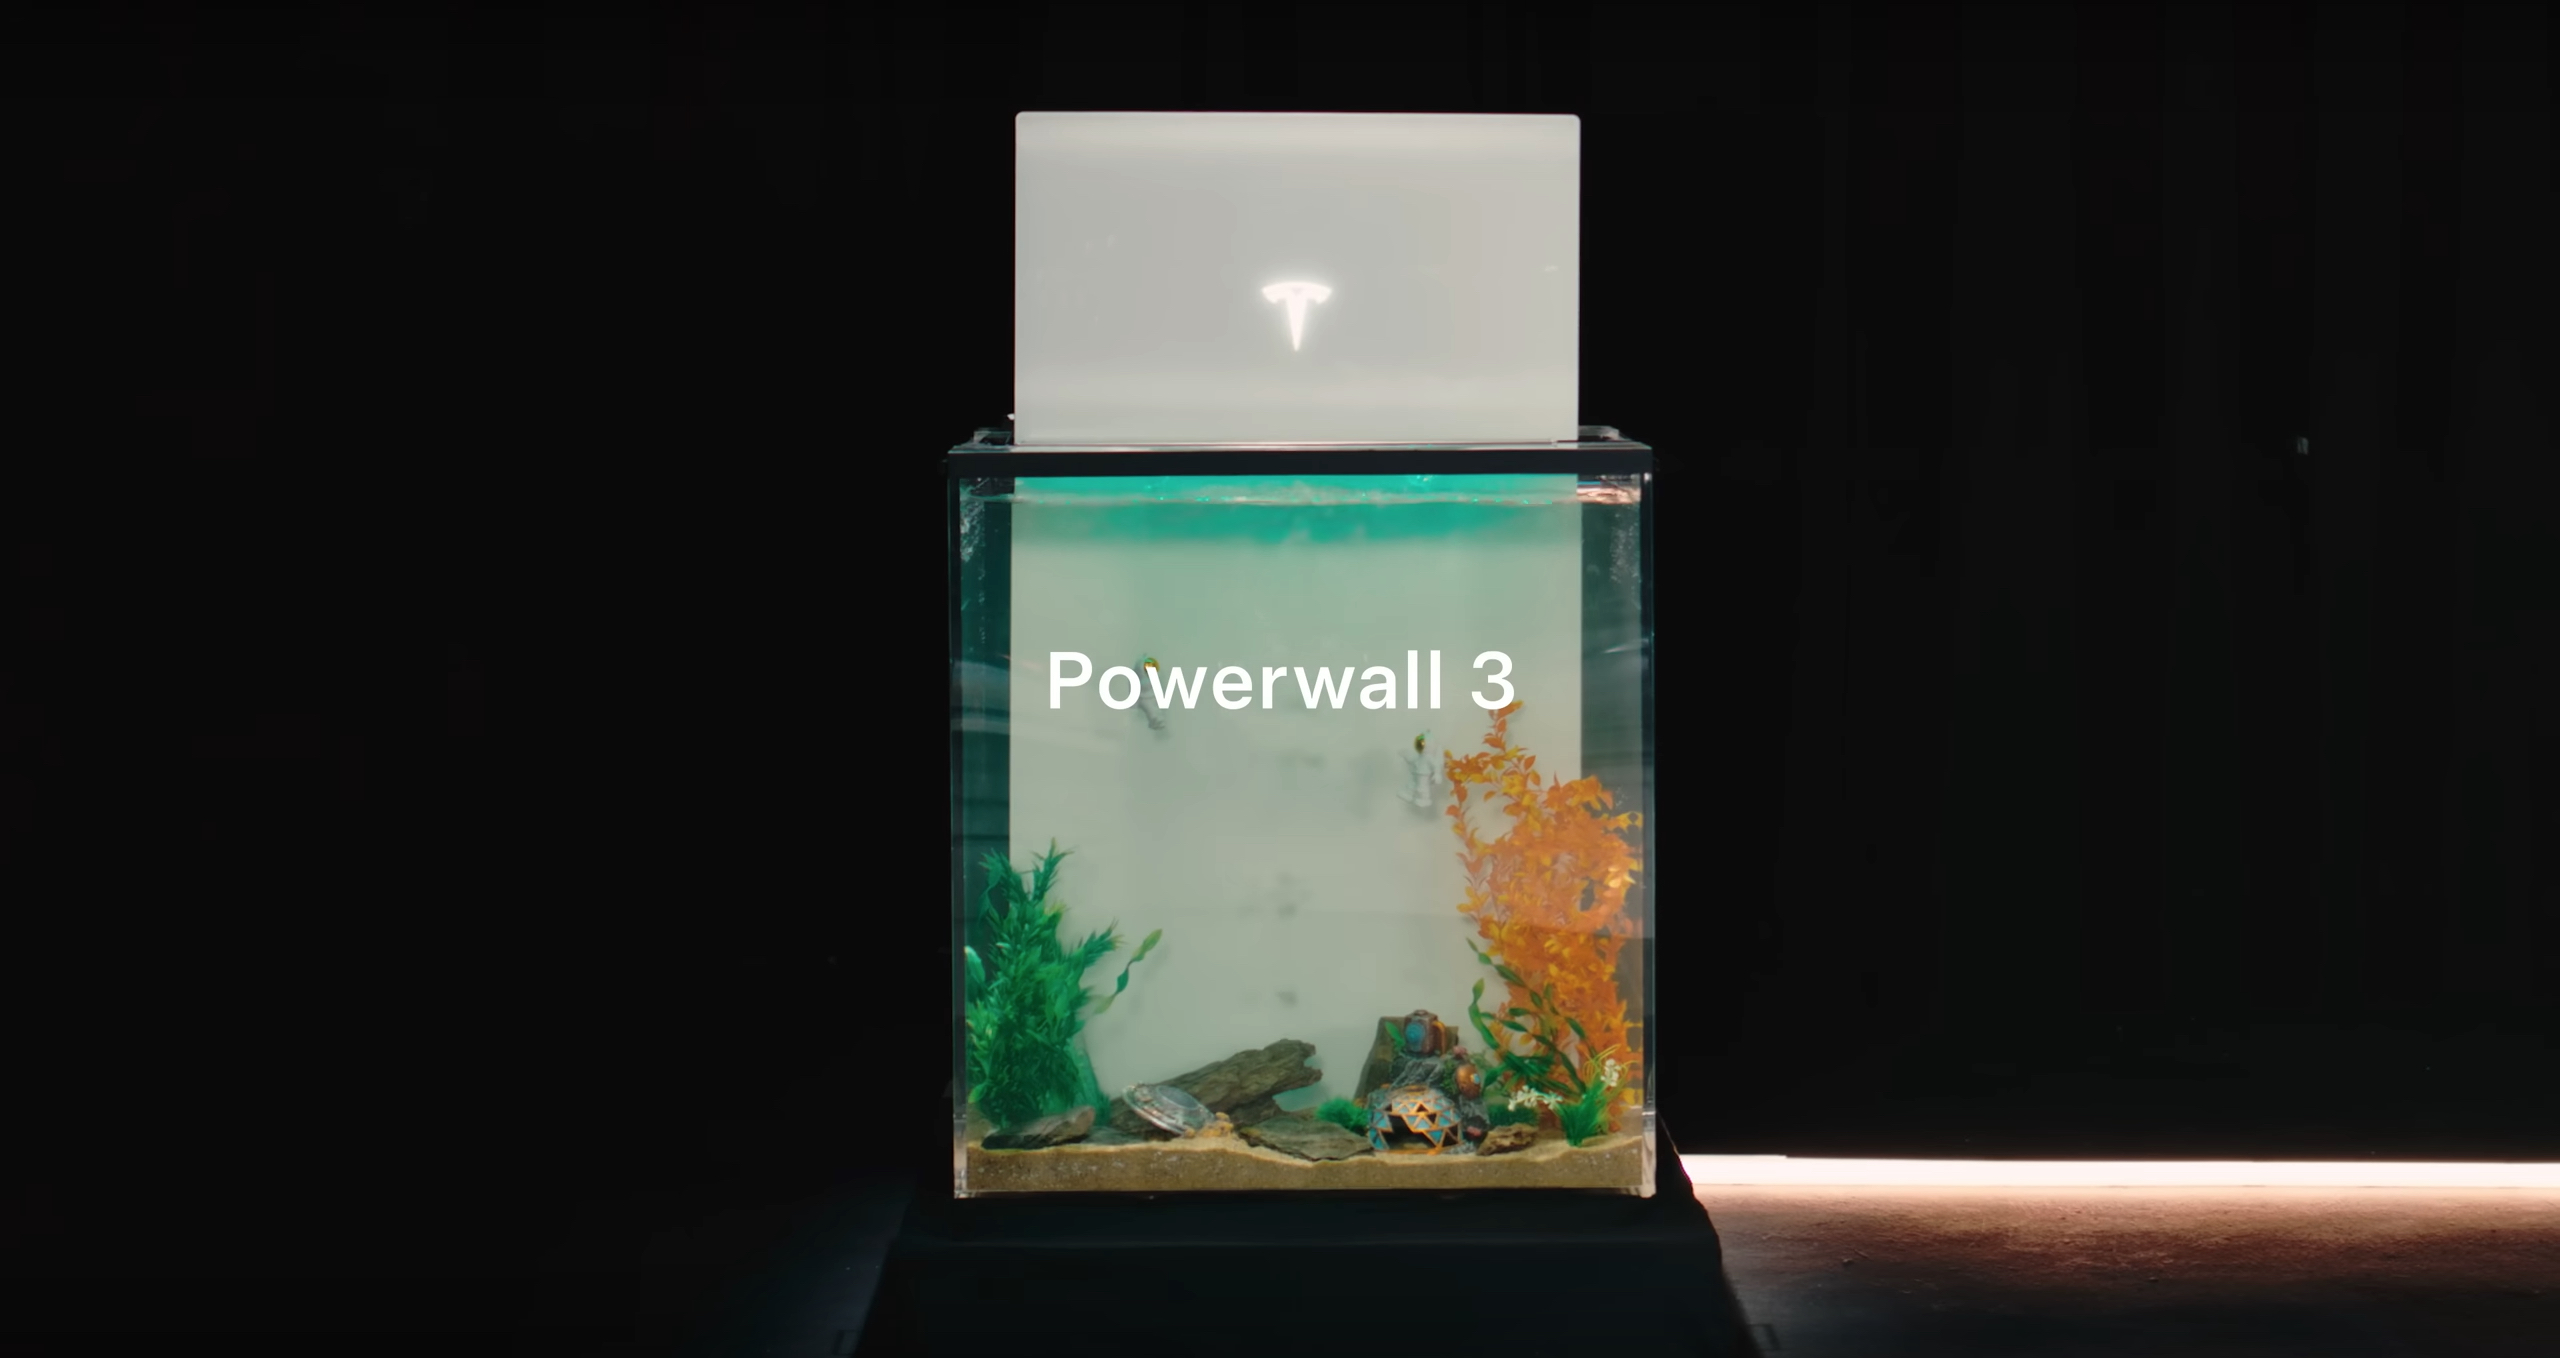 Tesla submerges Powerwall 3 in water amidst larger advertising efforts